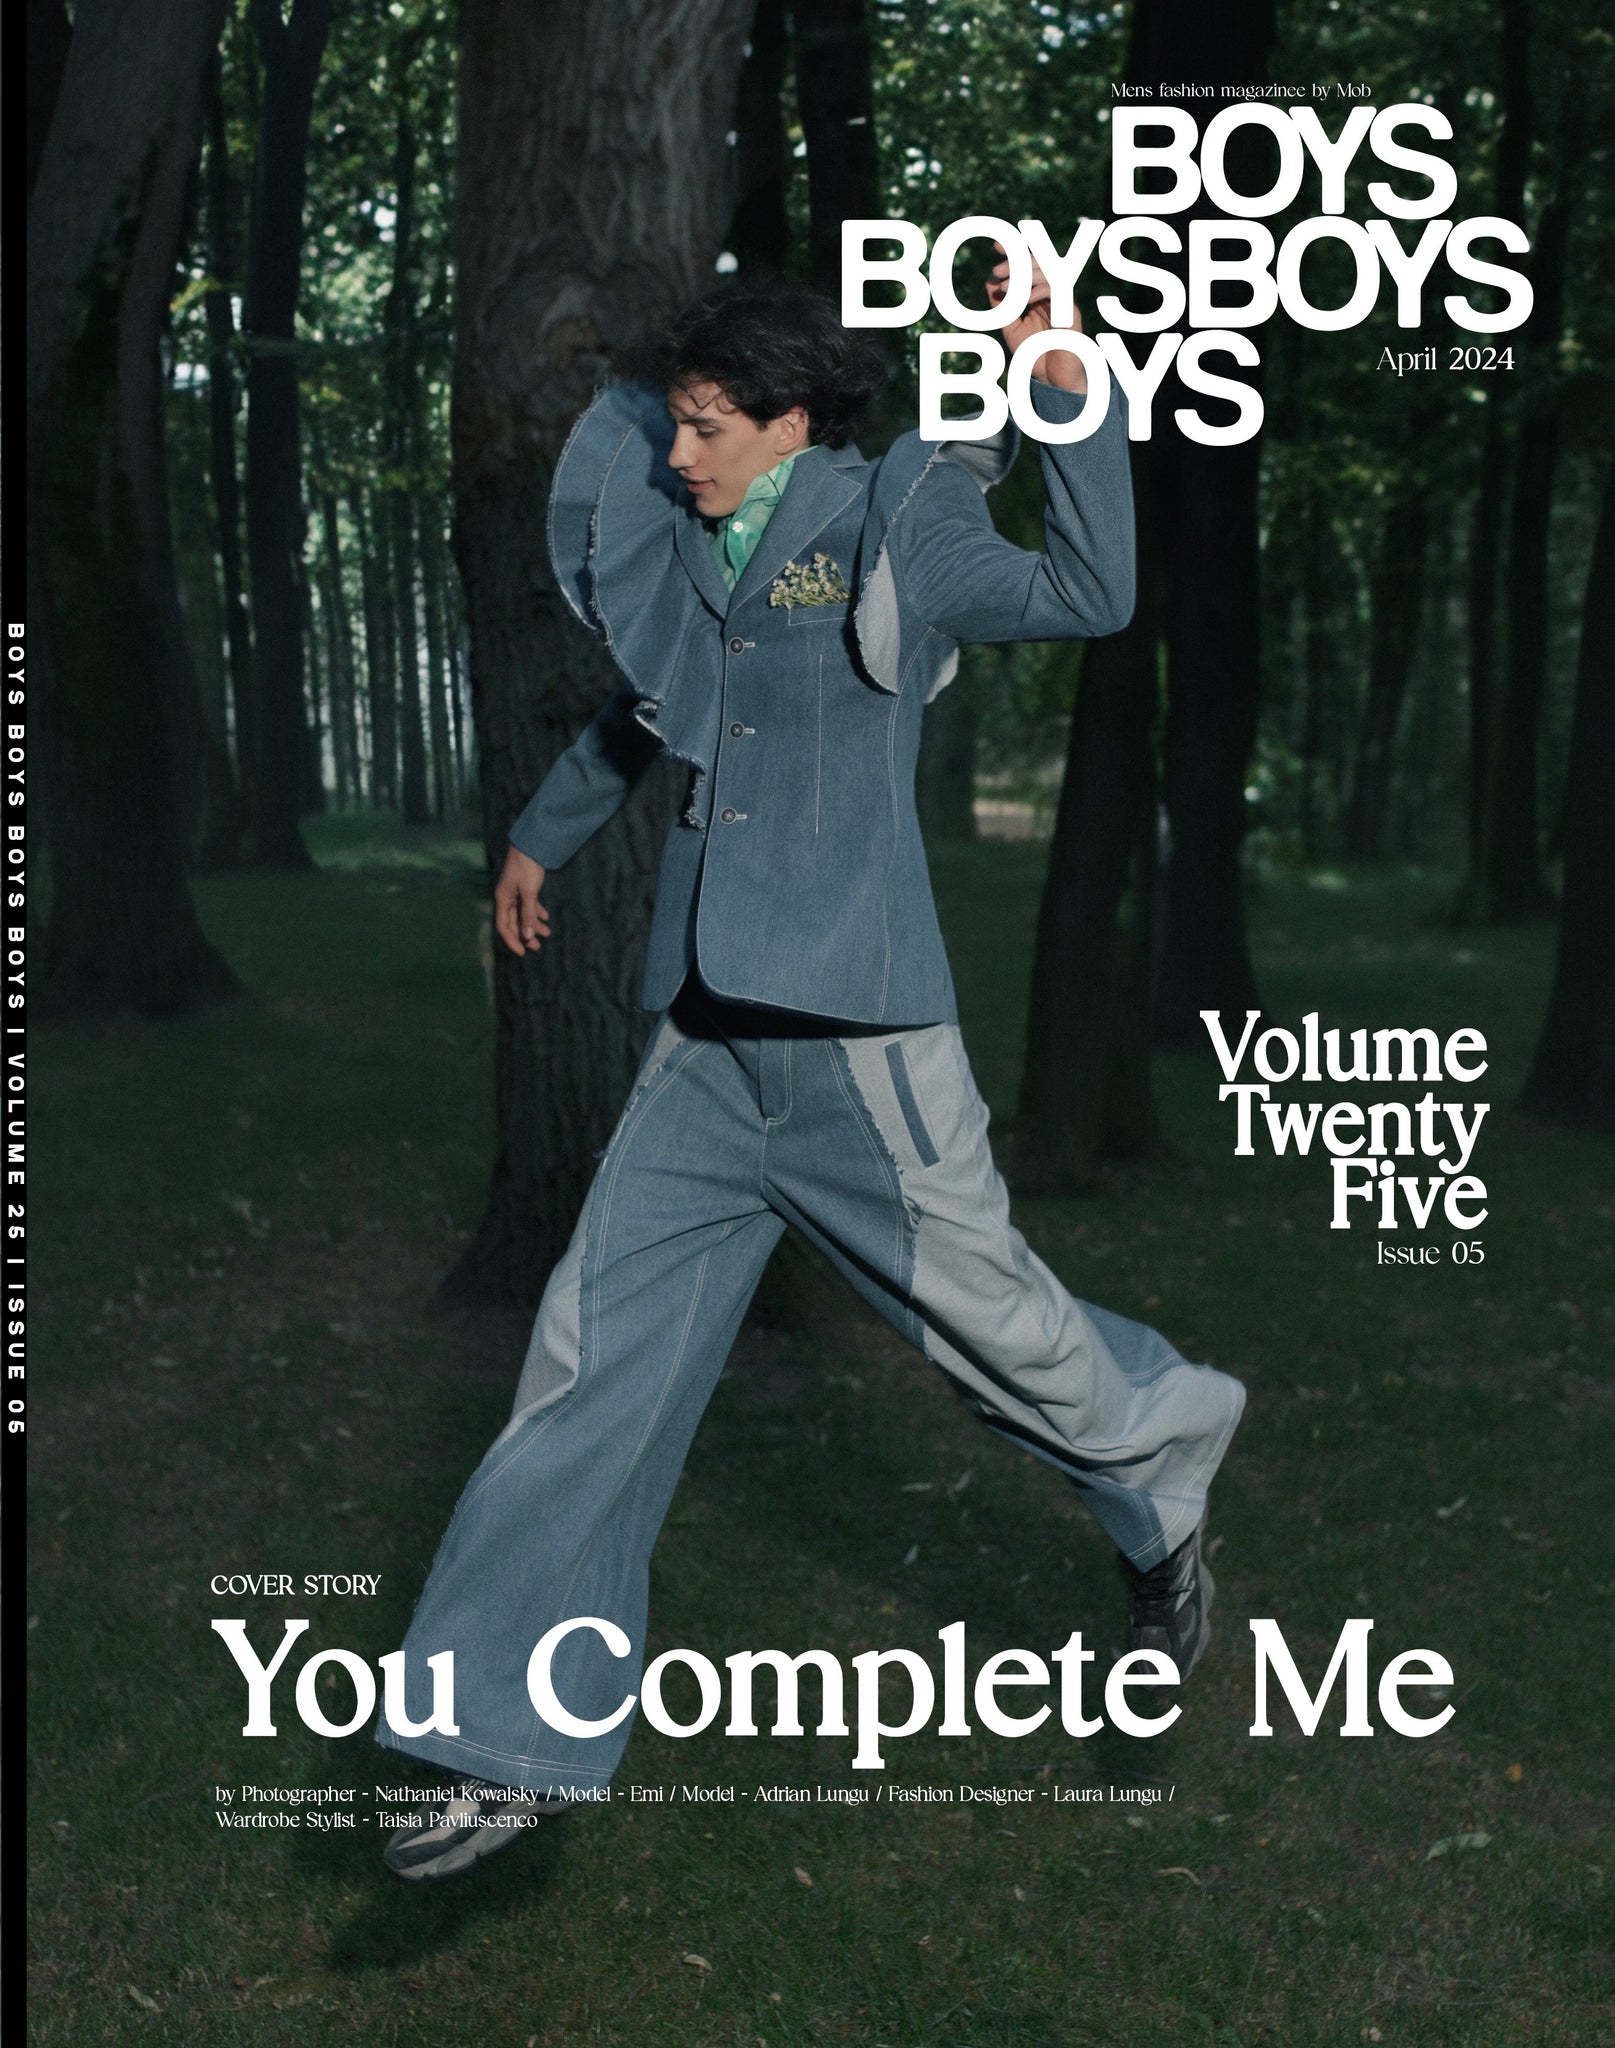 BOYS BOYS BOYS BOYS | VOLUME TWENTY FIVE | ISSUE #05